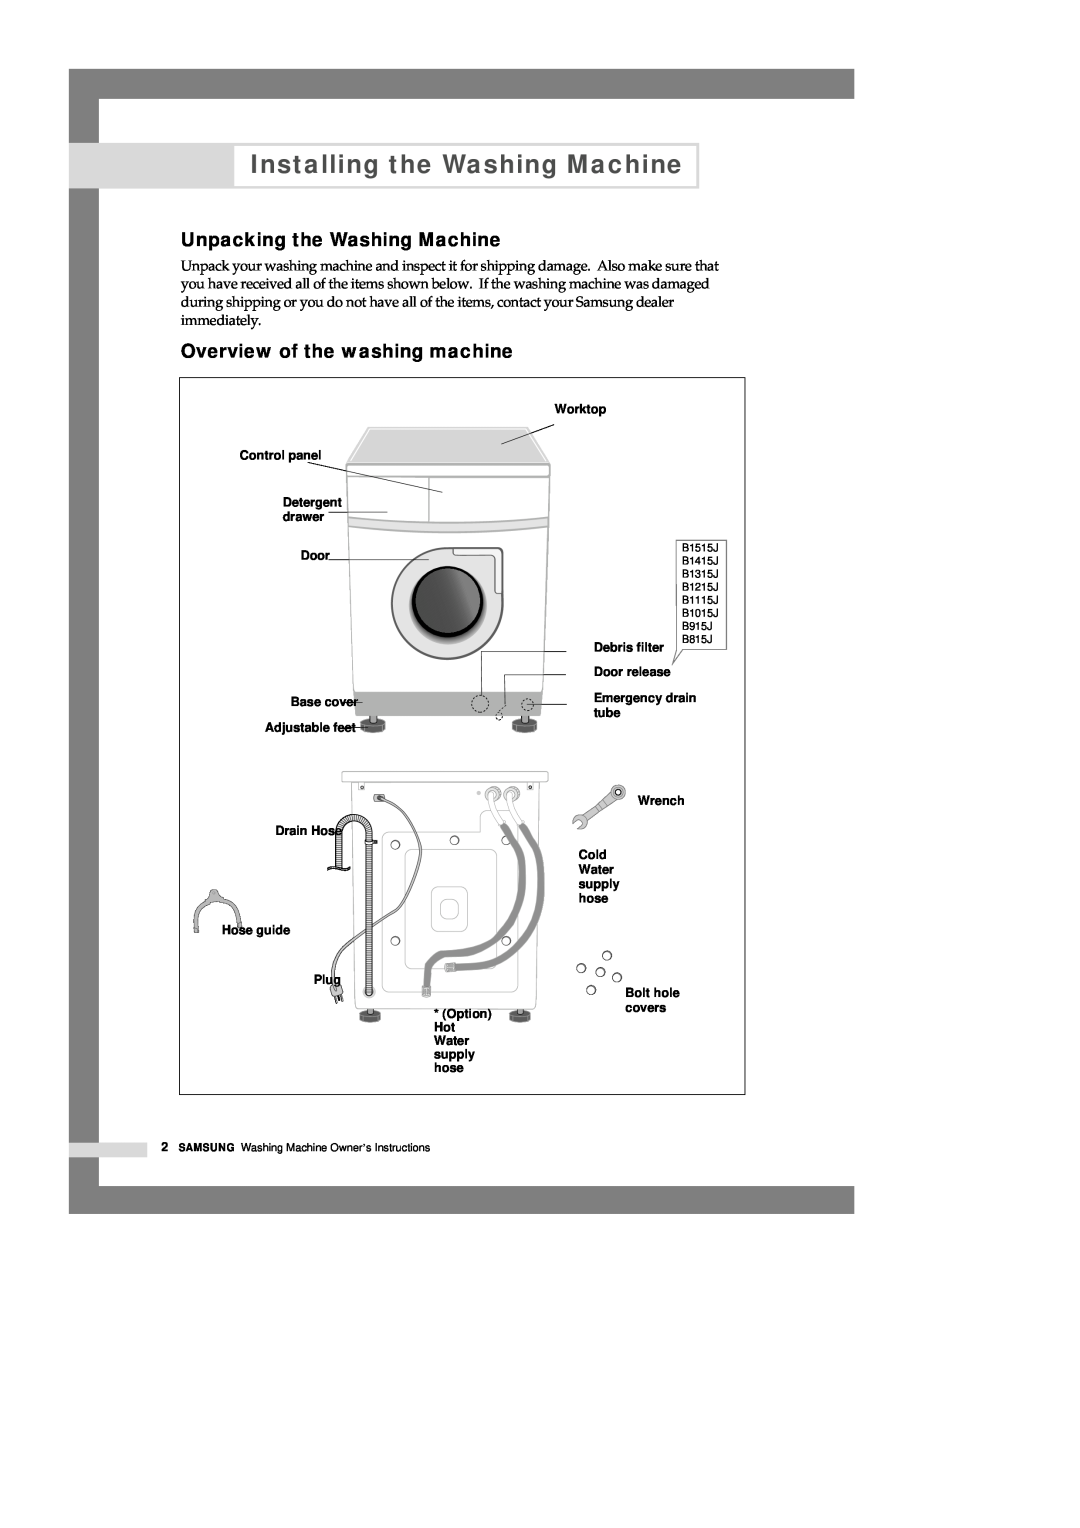 Samsung B1313J, B915J, B815J Installing the Washing Machine, Unpacking the Washing Machine, Overview of the washing machine 